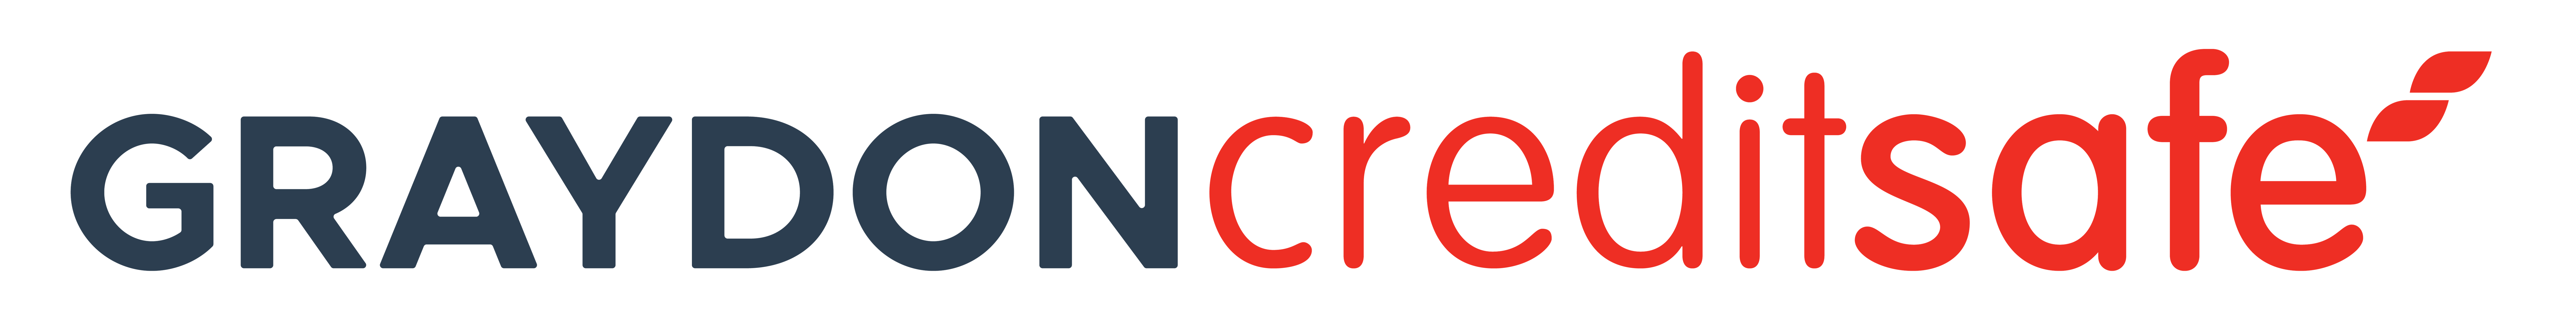 graydoncreditsafe logo colour 
